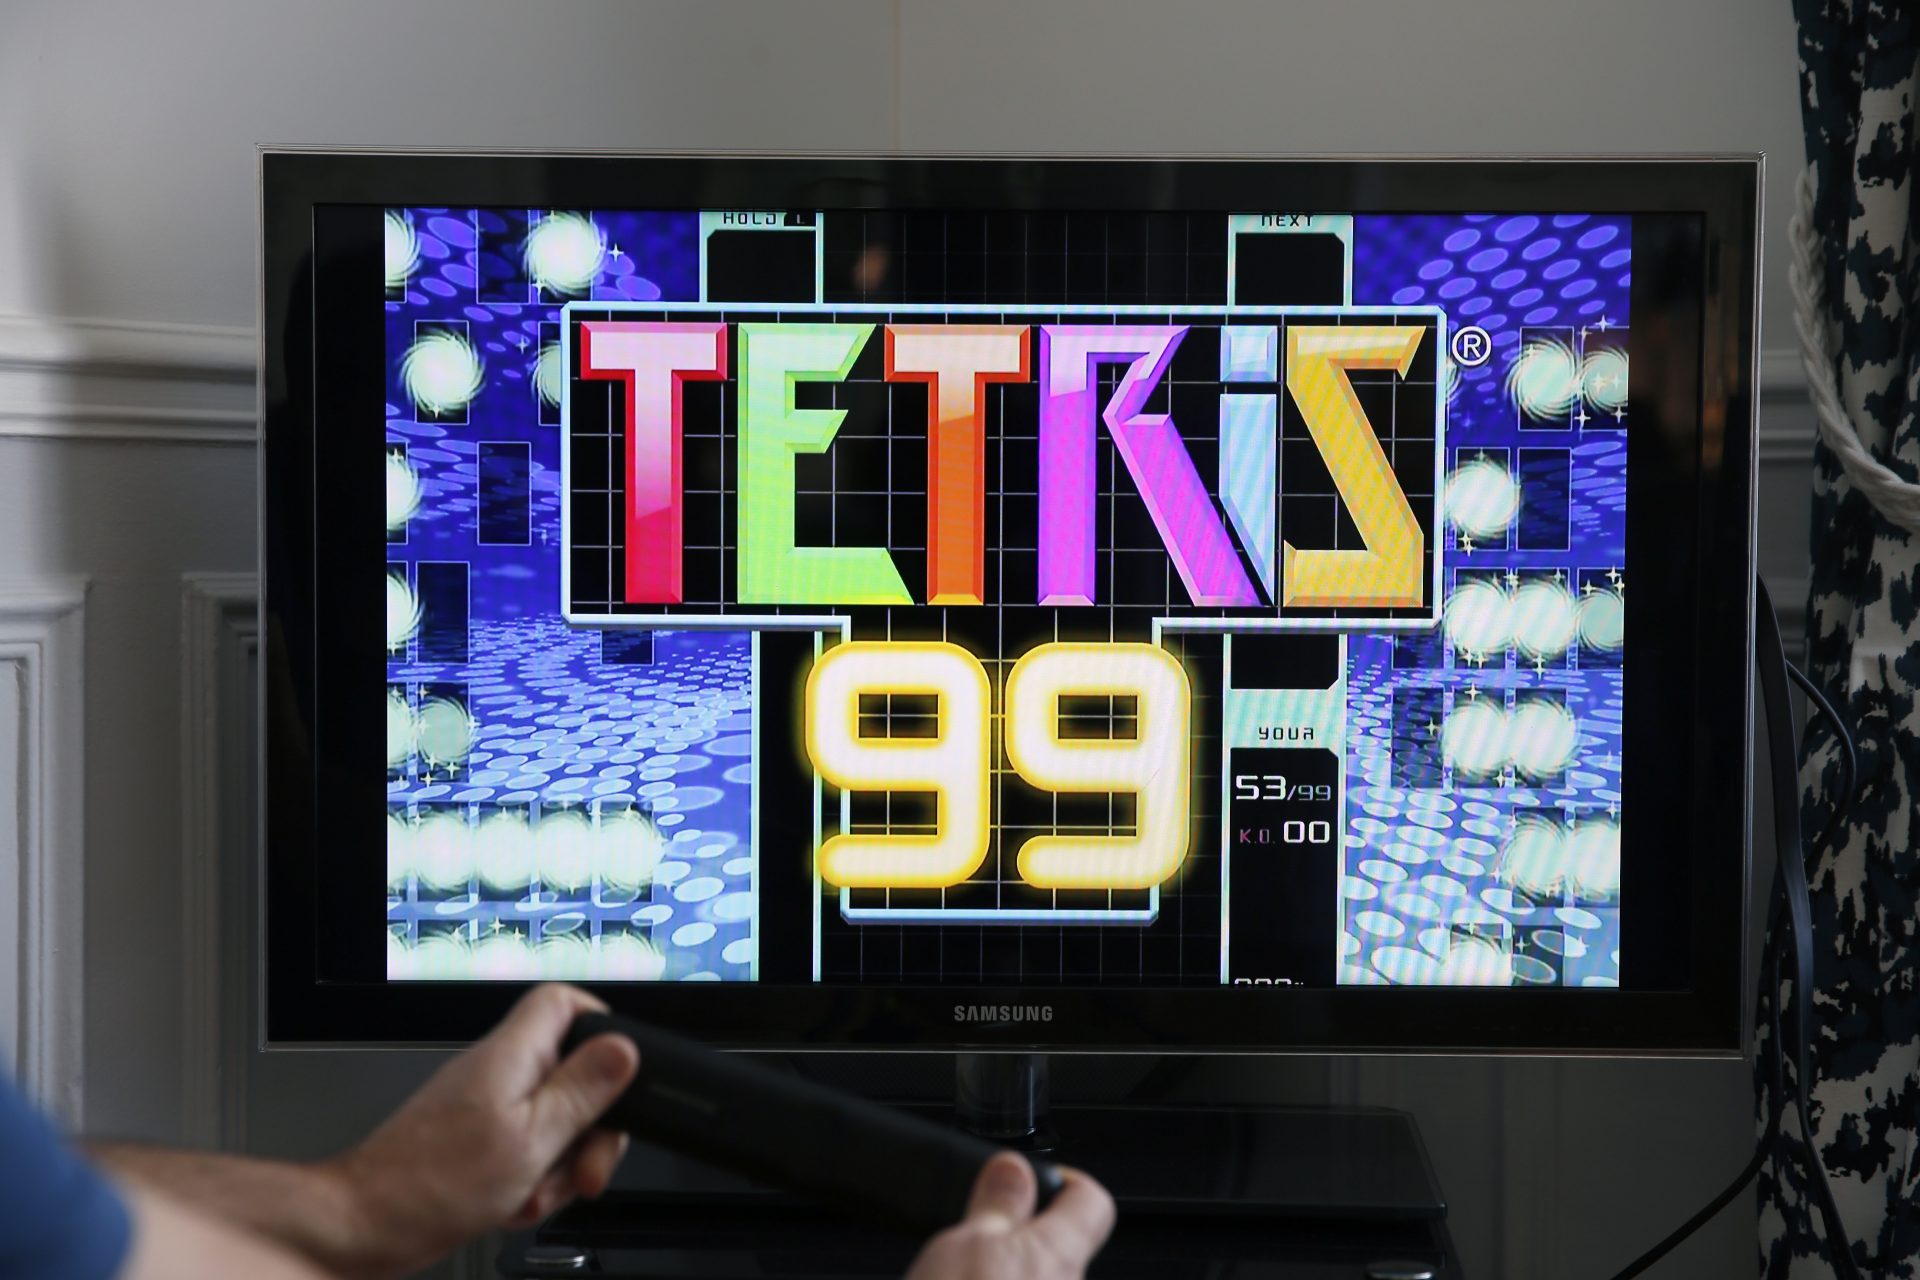 The birthplace of Tetris